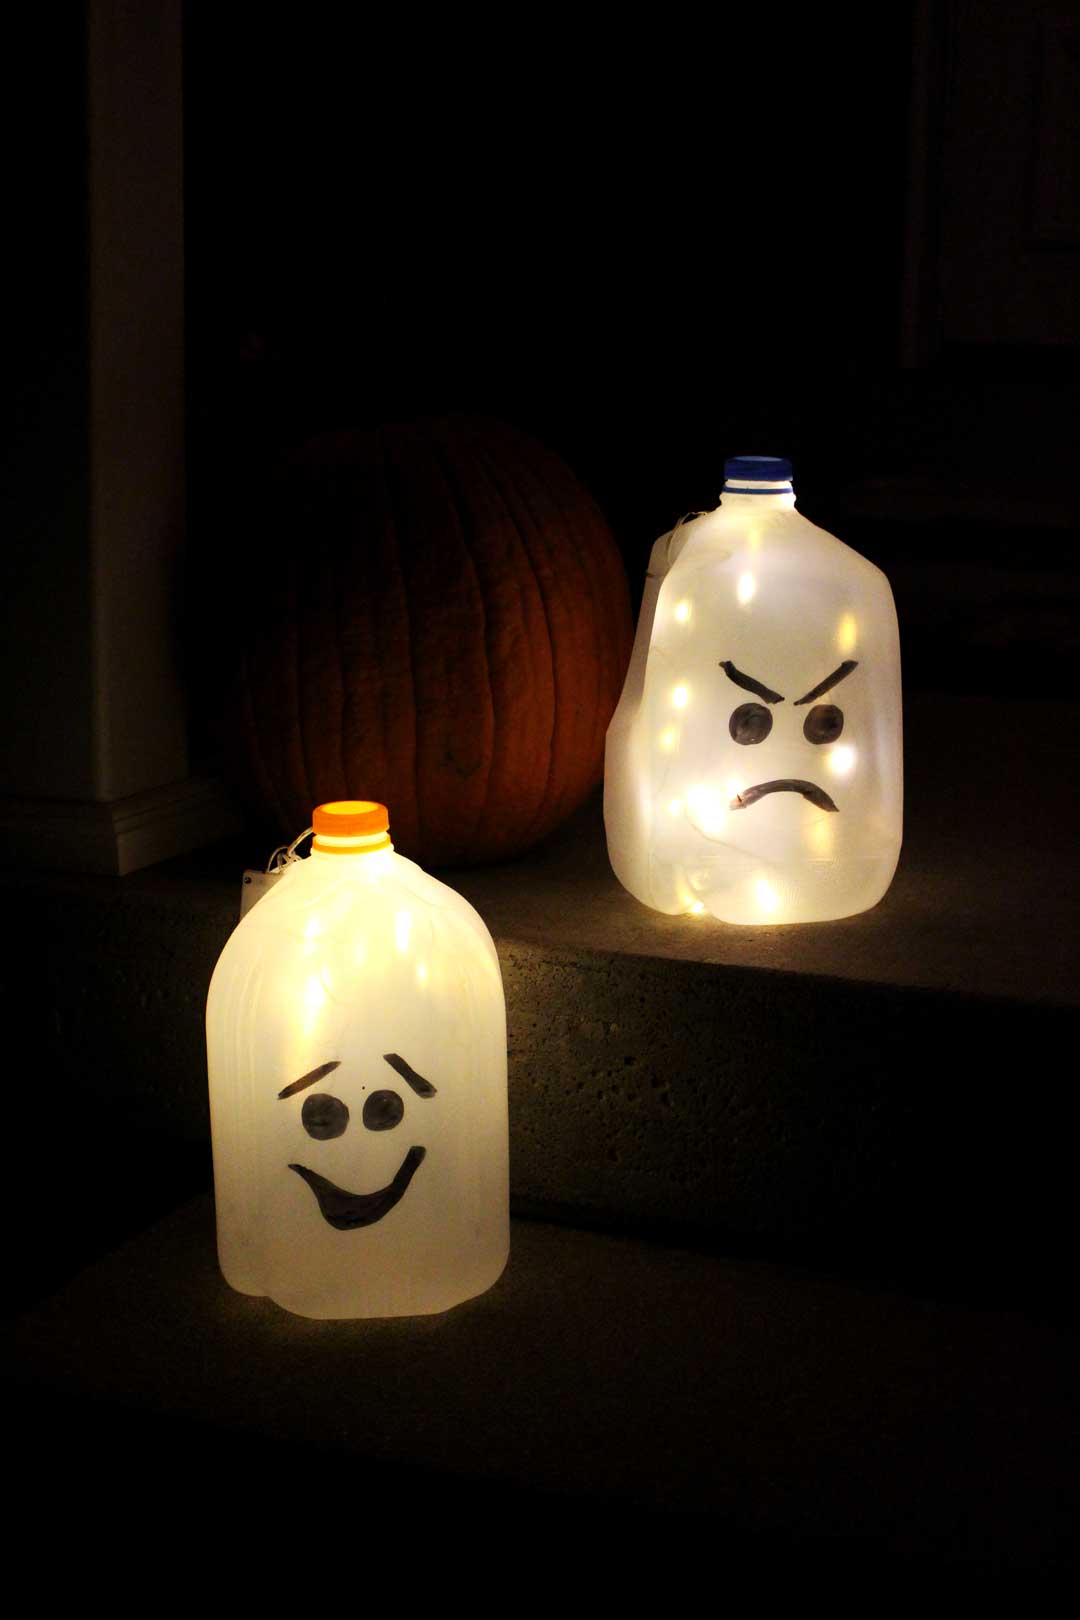 https://welcometonanas.com/wp-content/uploads/2021/10/Welcome-to-Nanas-Recycled-Milk-Jug-Ghost-Luminaries-Kids-Halloween-Decoration-Craft-1.jpg